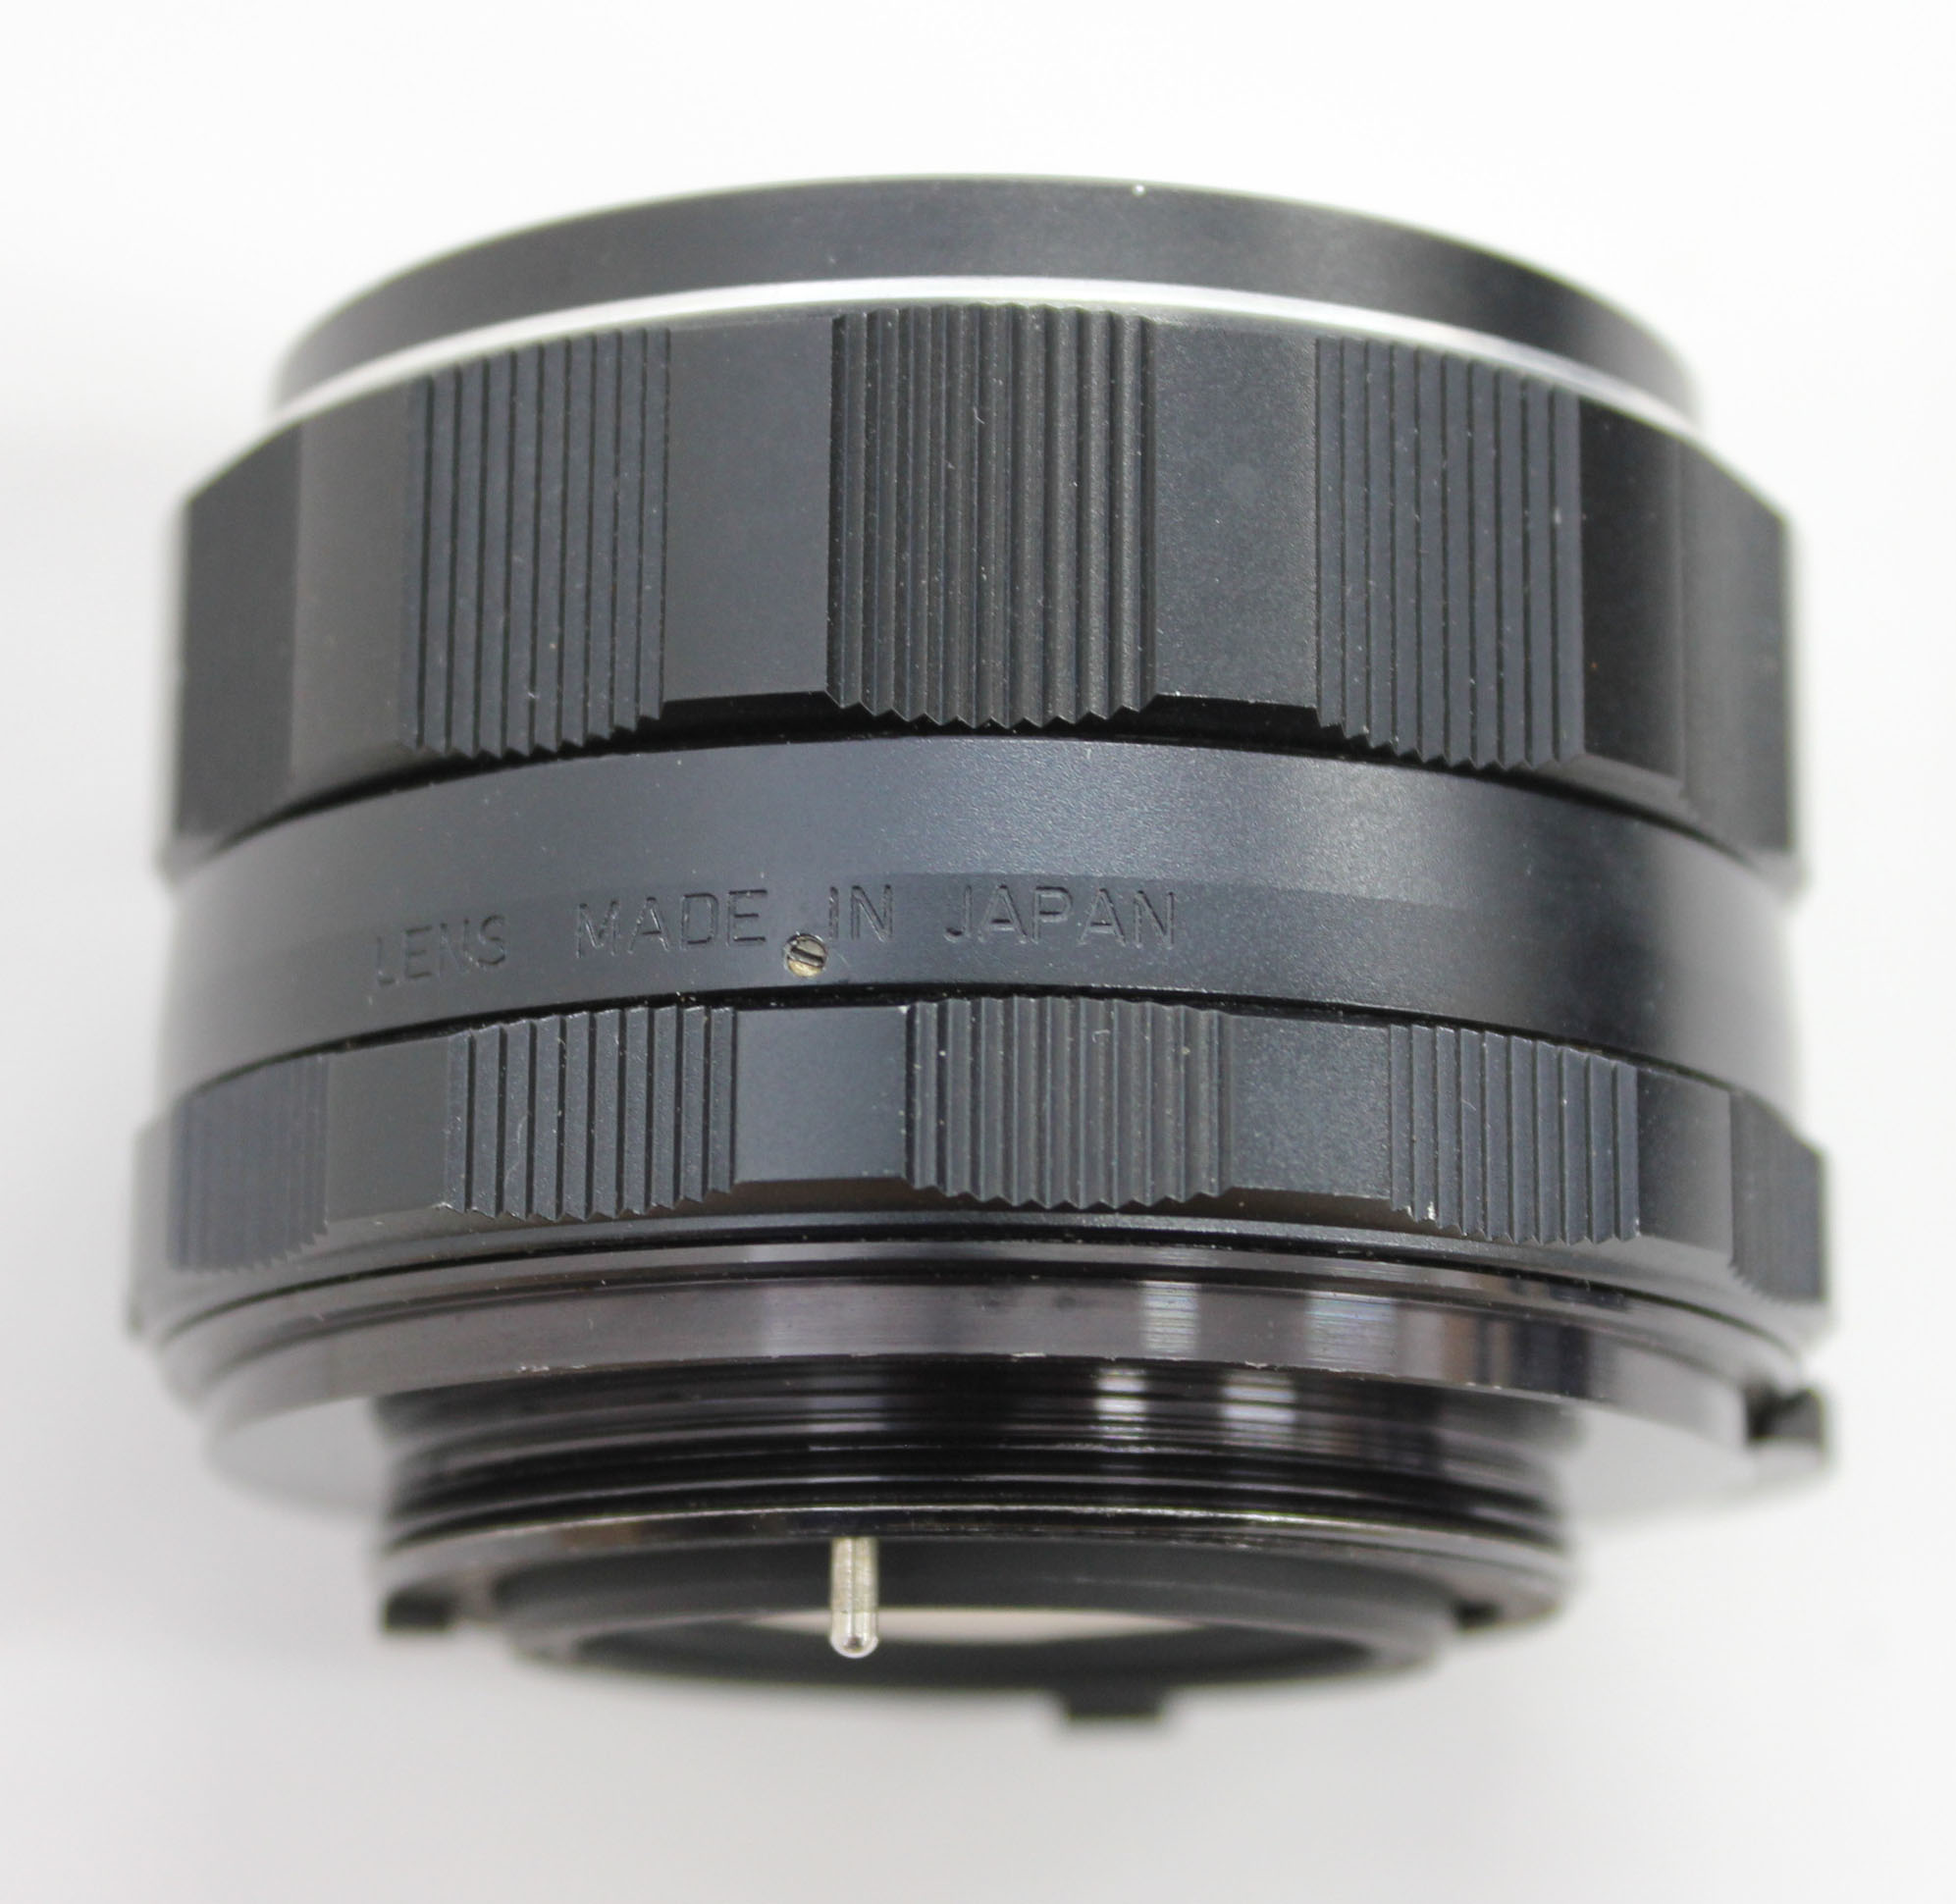 Asahi Pentax Spotmatic F SPF 35mm SLR Camera Black w/ SMC Super-Multi-Coated Takumar 55mm F/1.8 Lens from Japan Photo 16